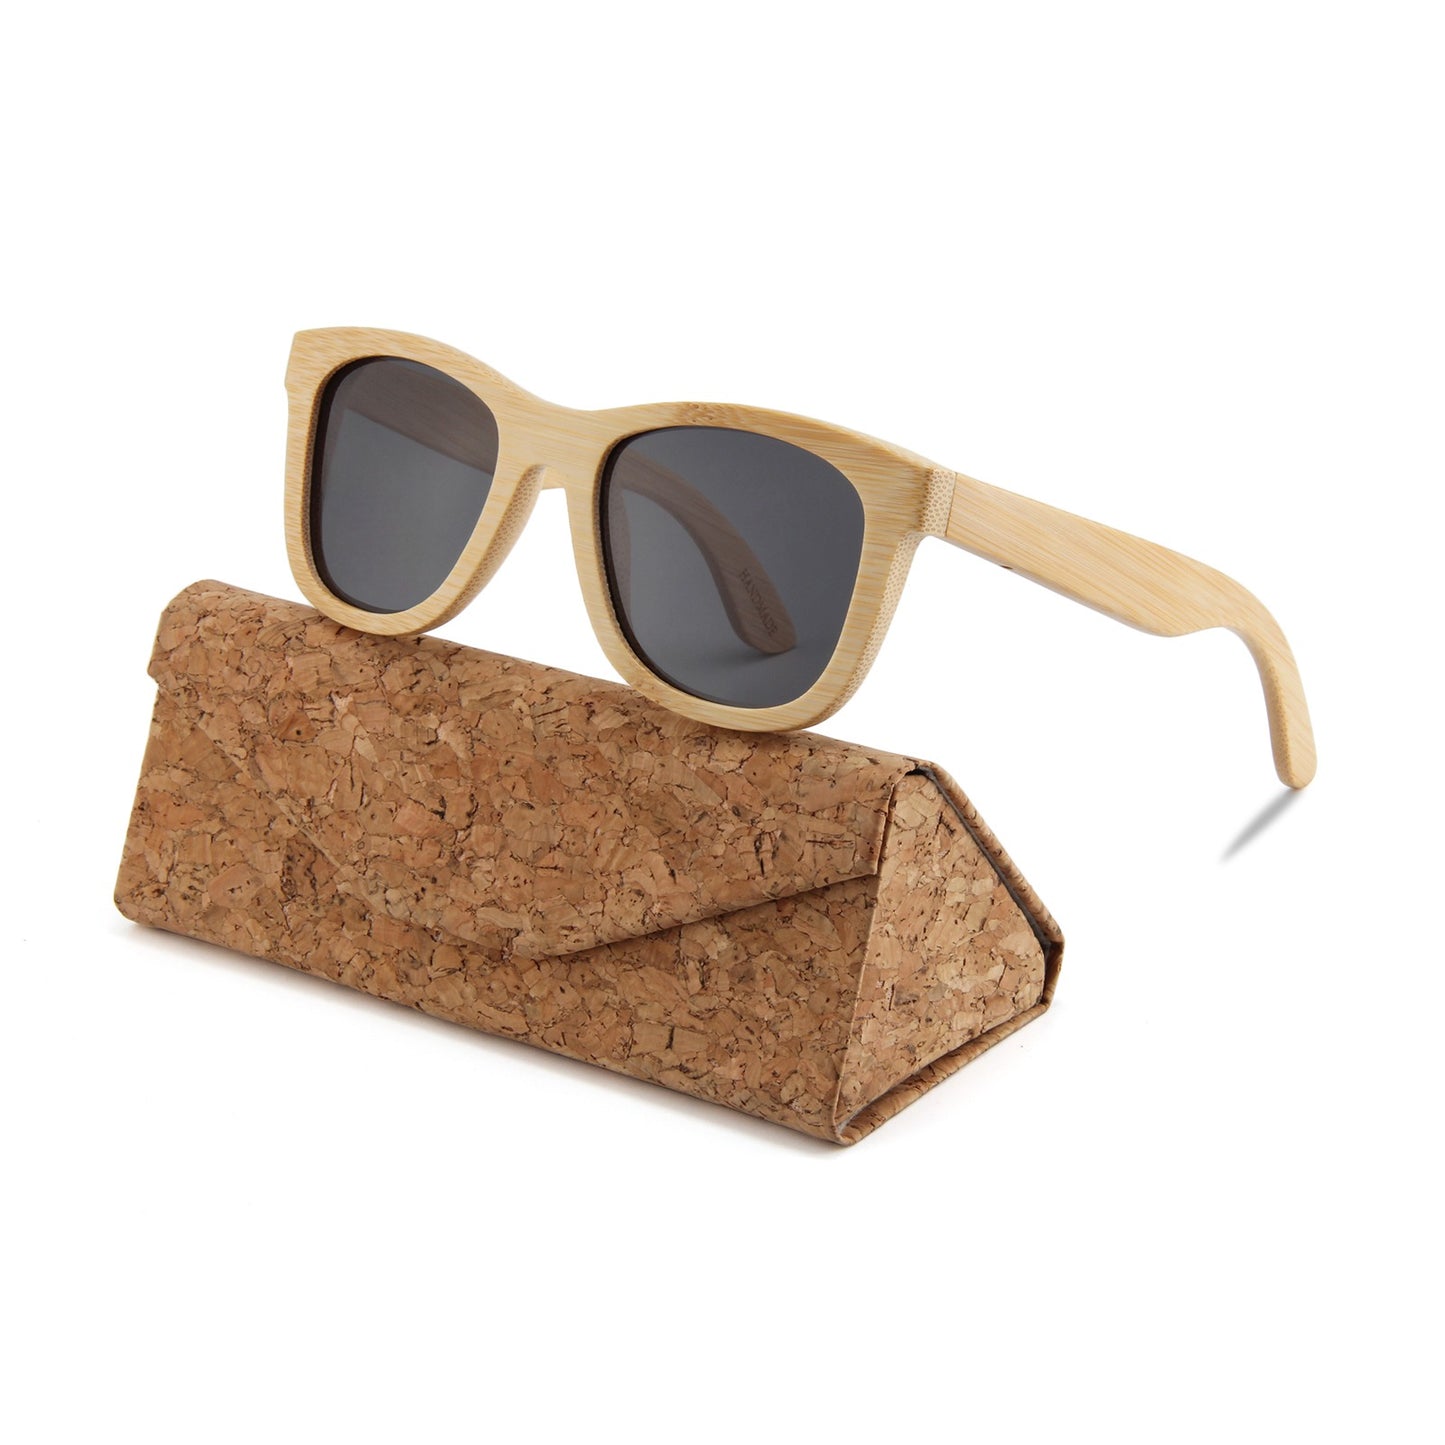 KAHUNA GREY Bamboo Wayfarer Sunglasses - SPECIAL OFFER